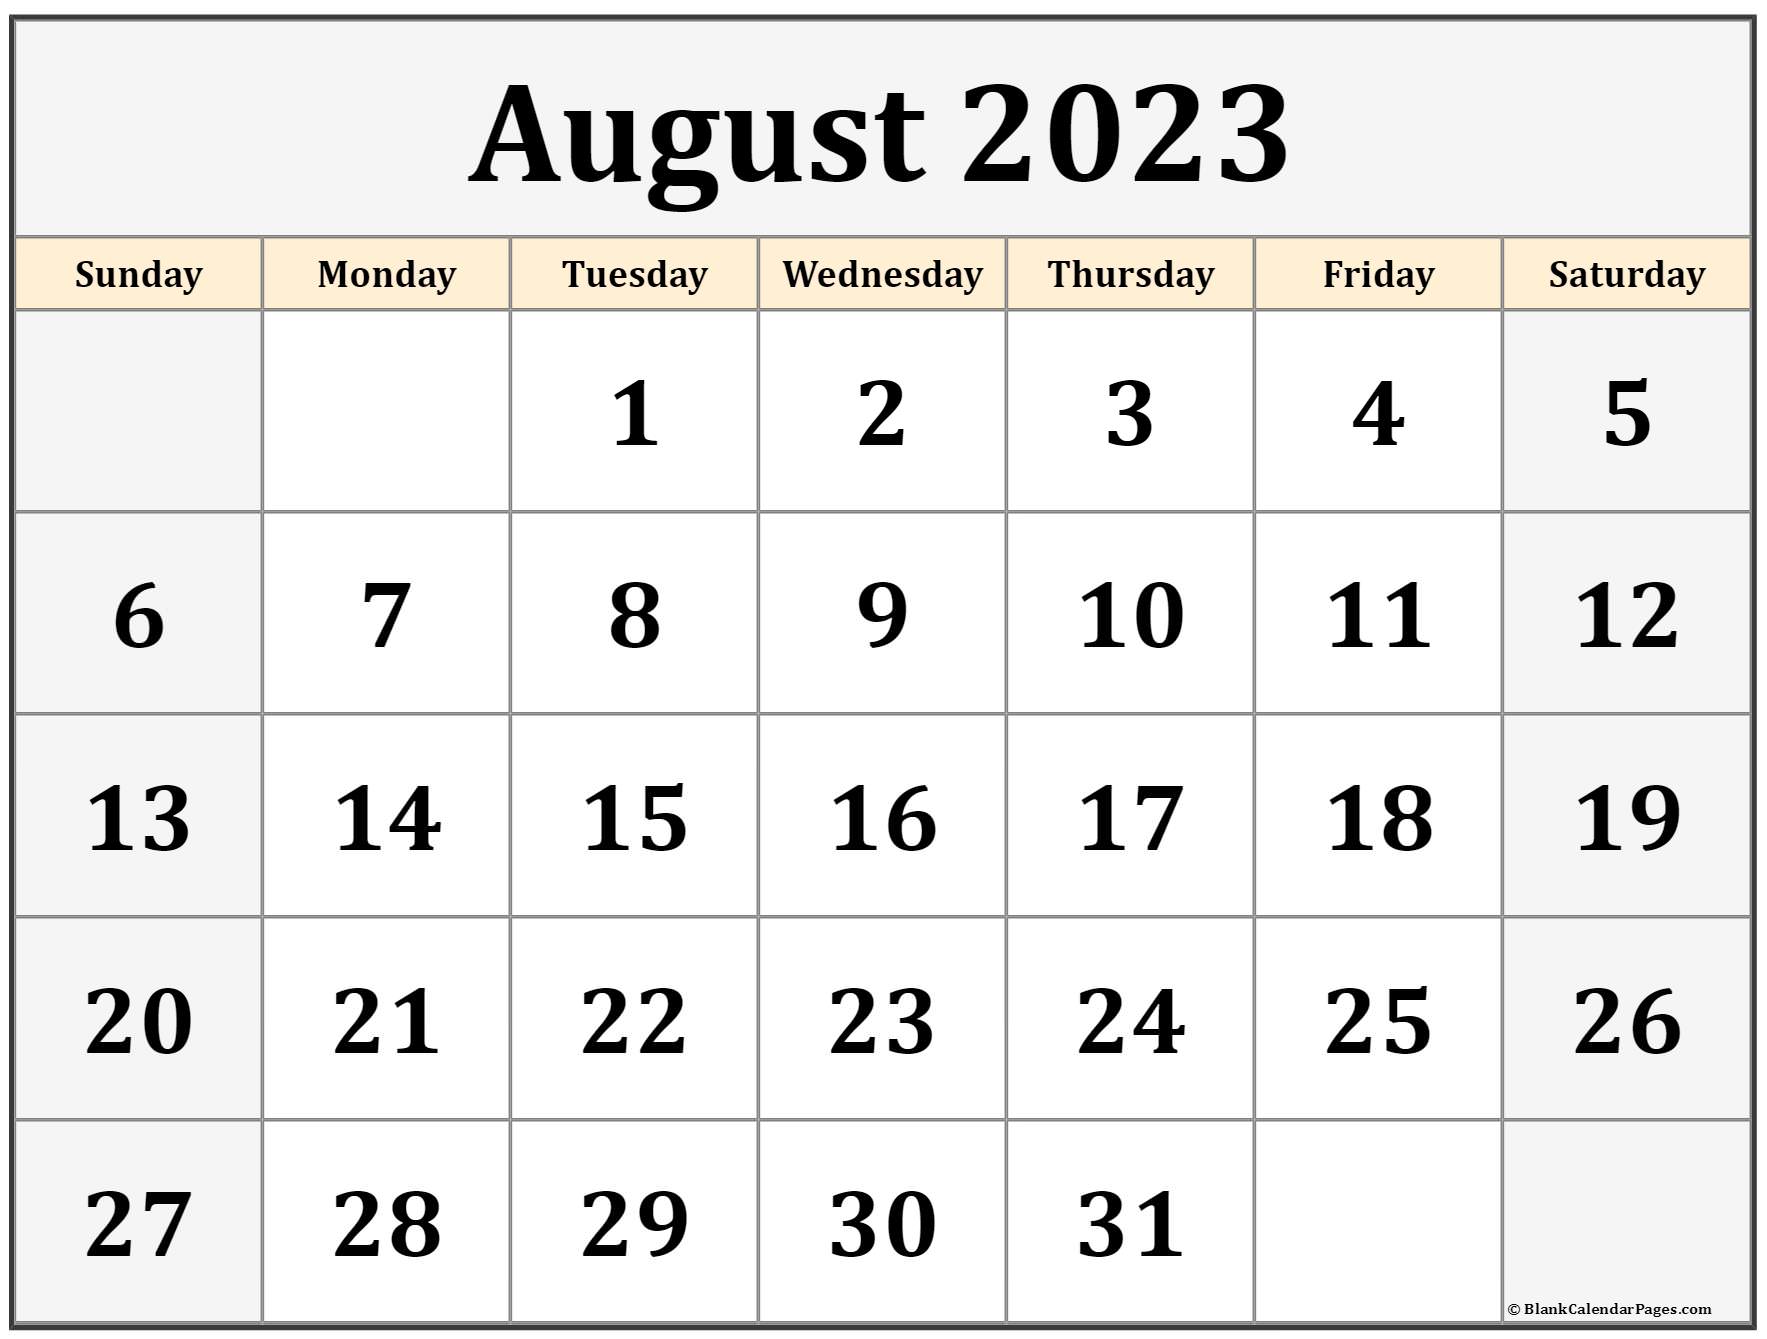 august-2023-calendar-pages-gambaran